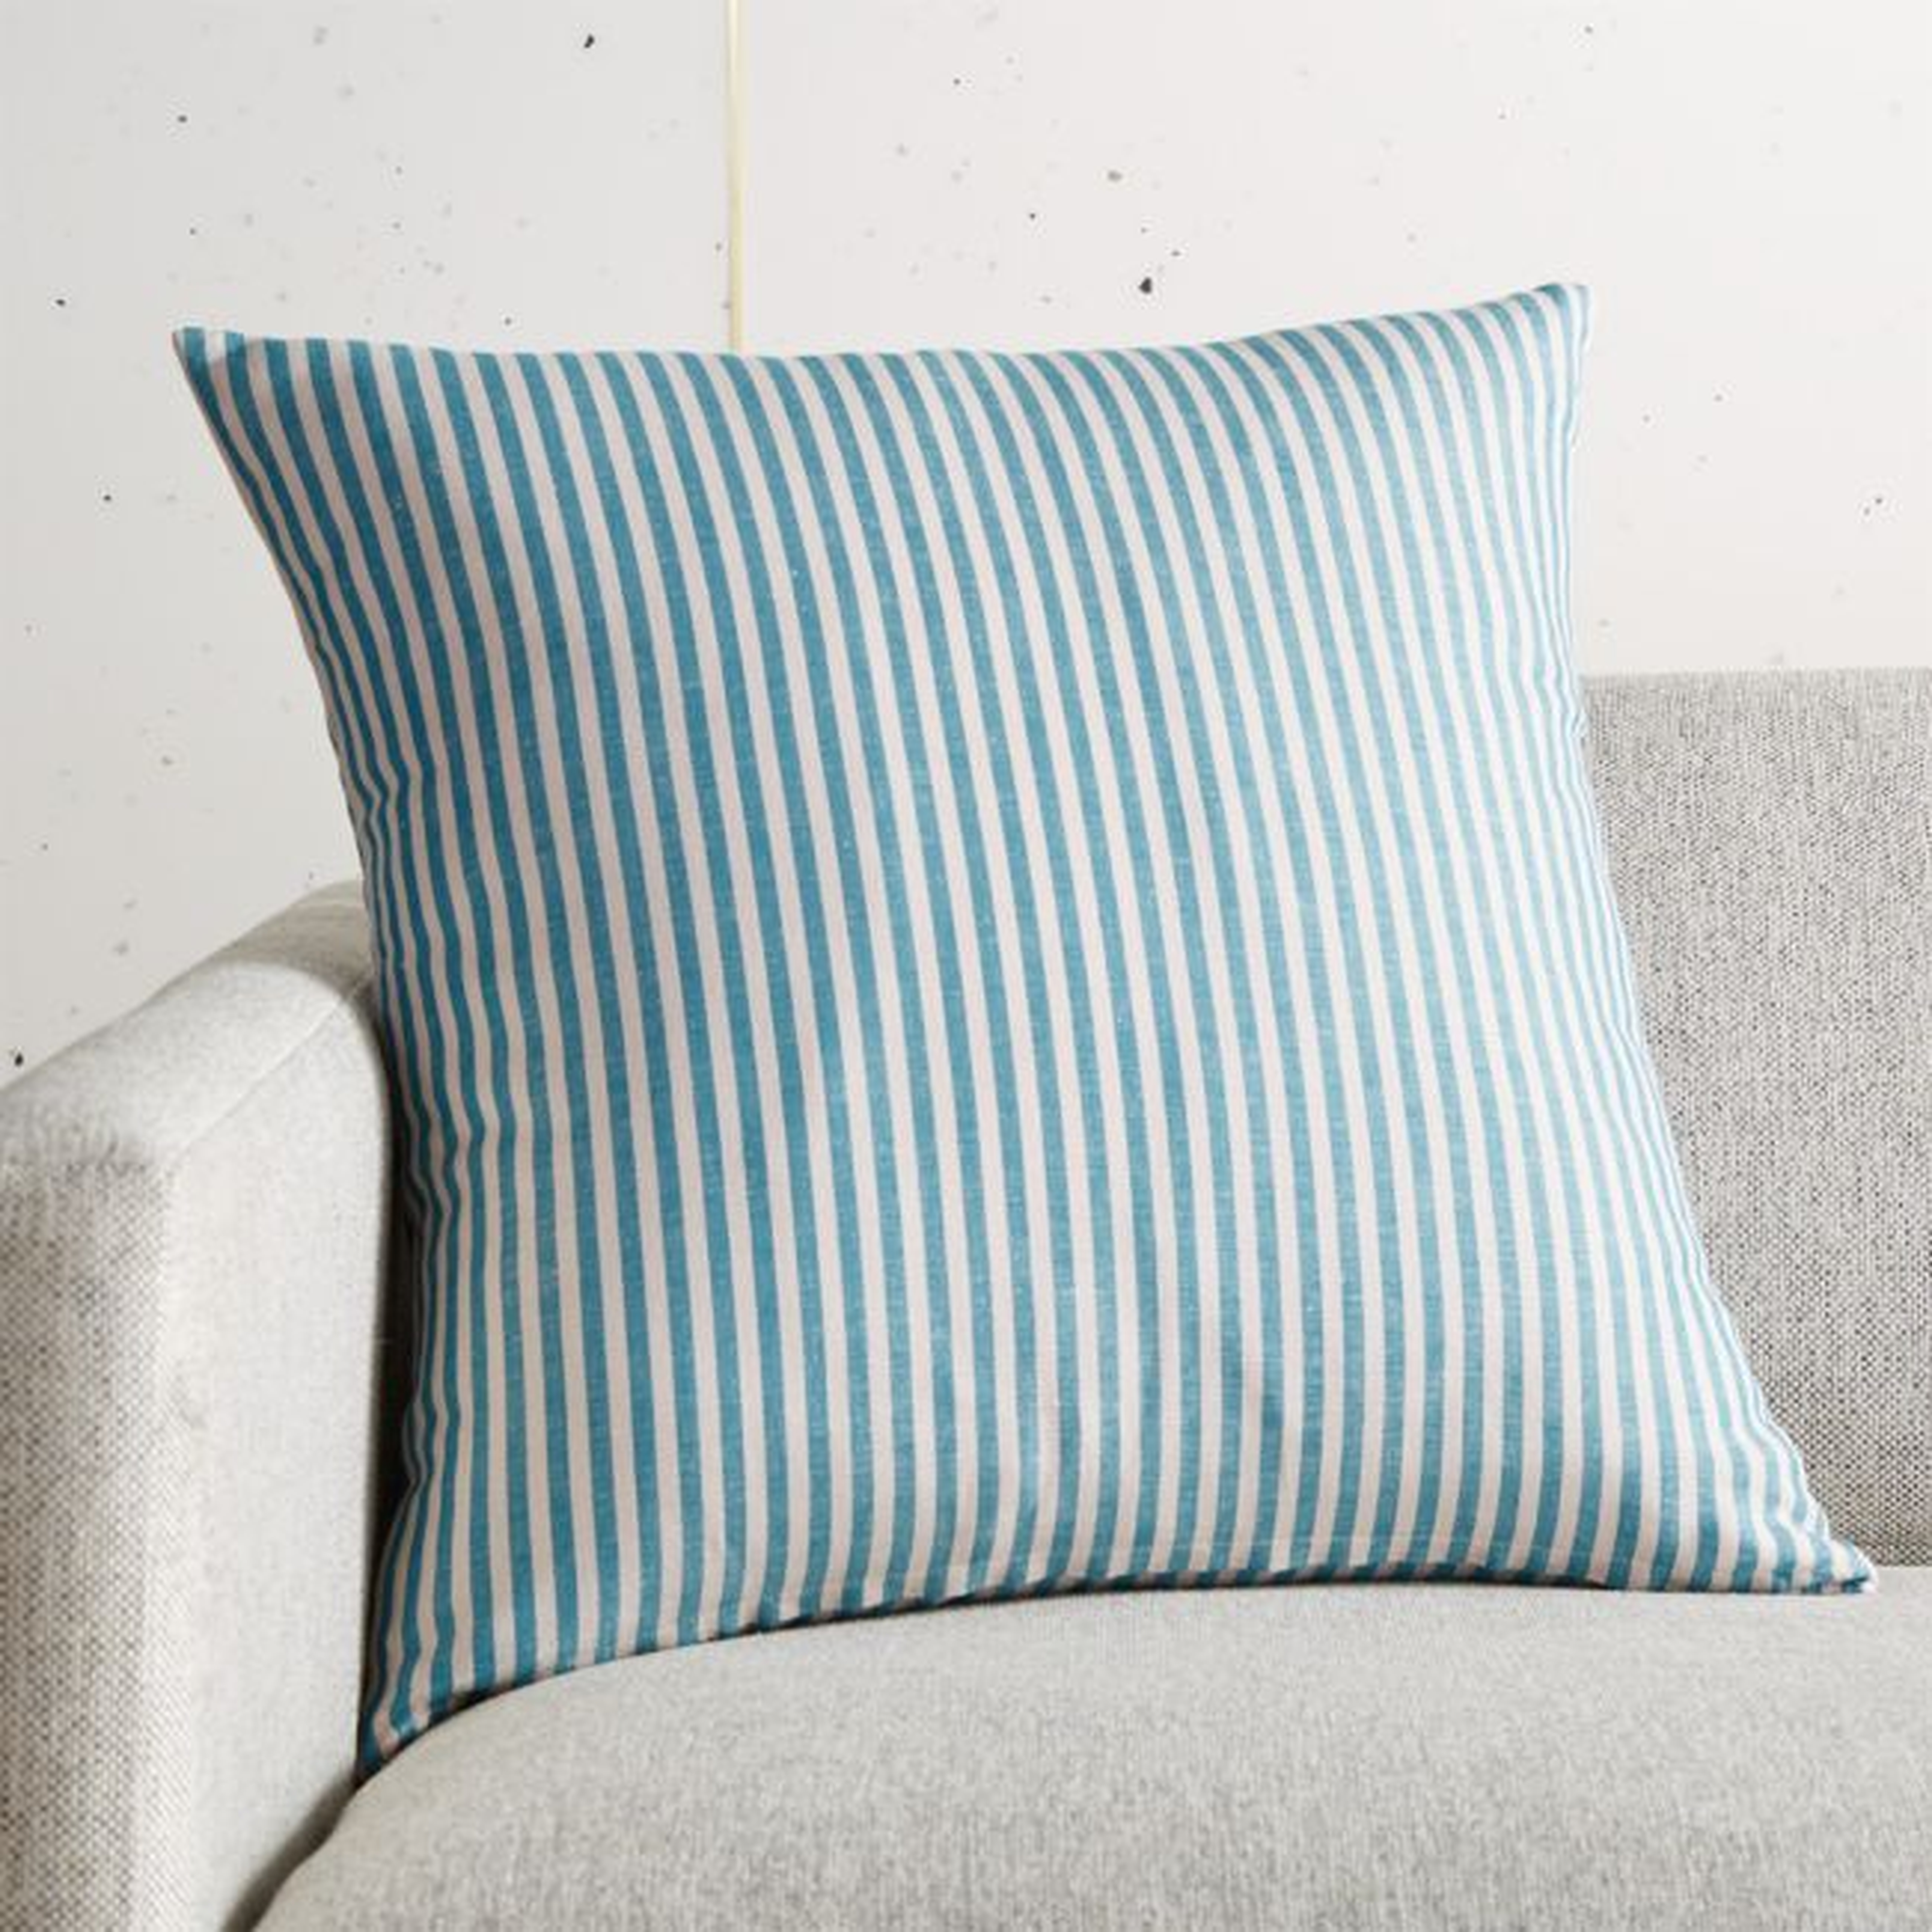 18" Costa Nova Linen Stripe Pillow with Down-Alternative Insert - CB2